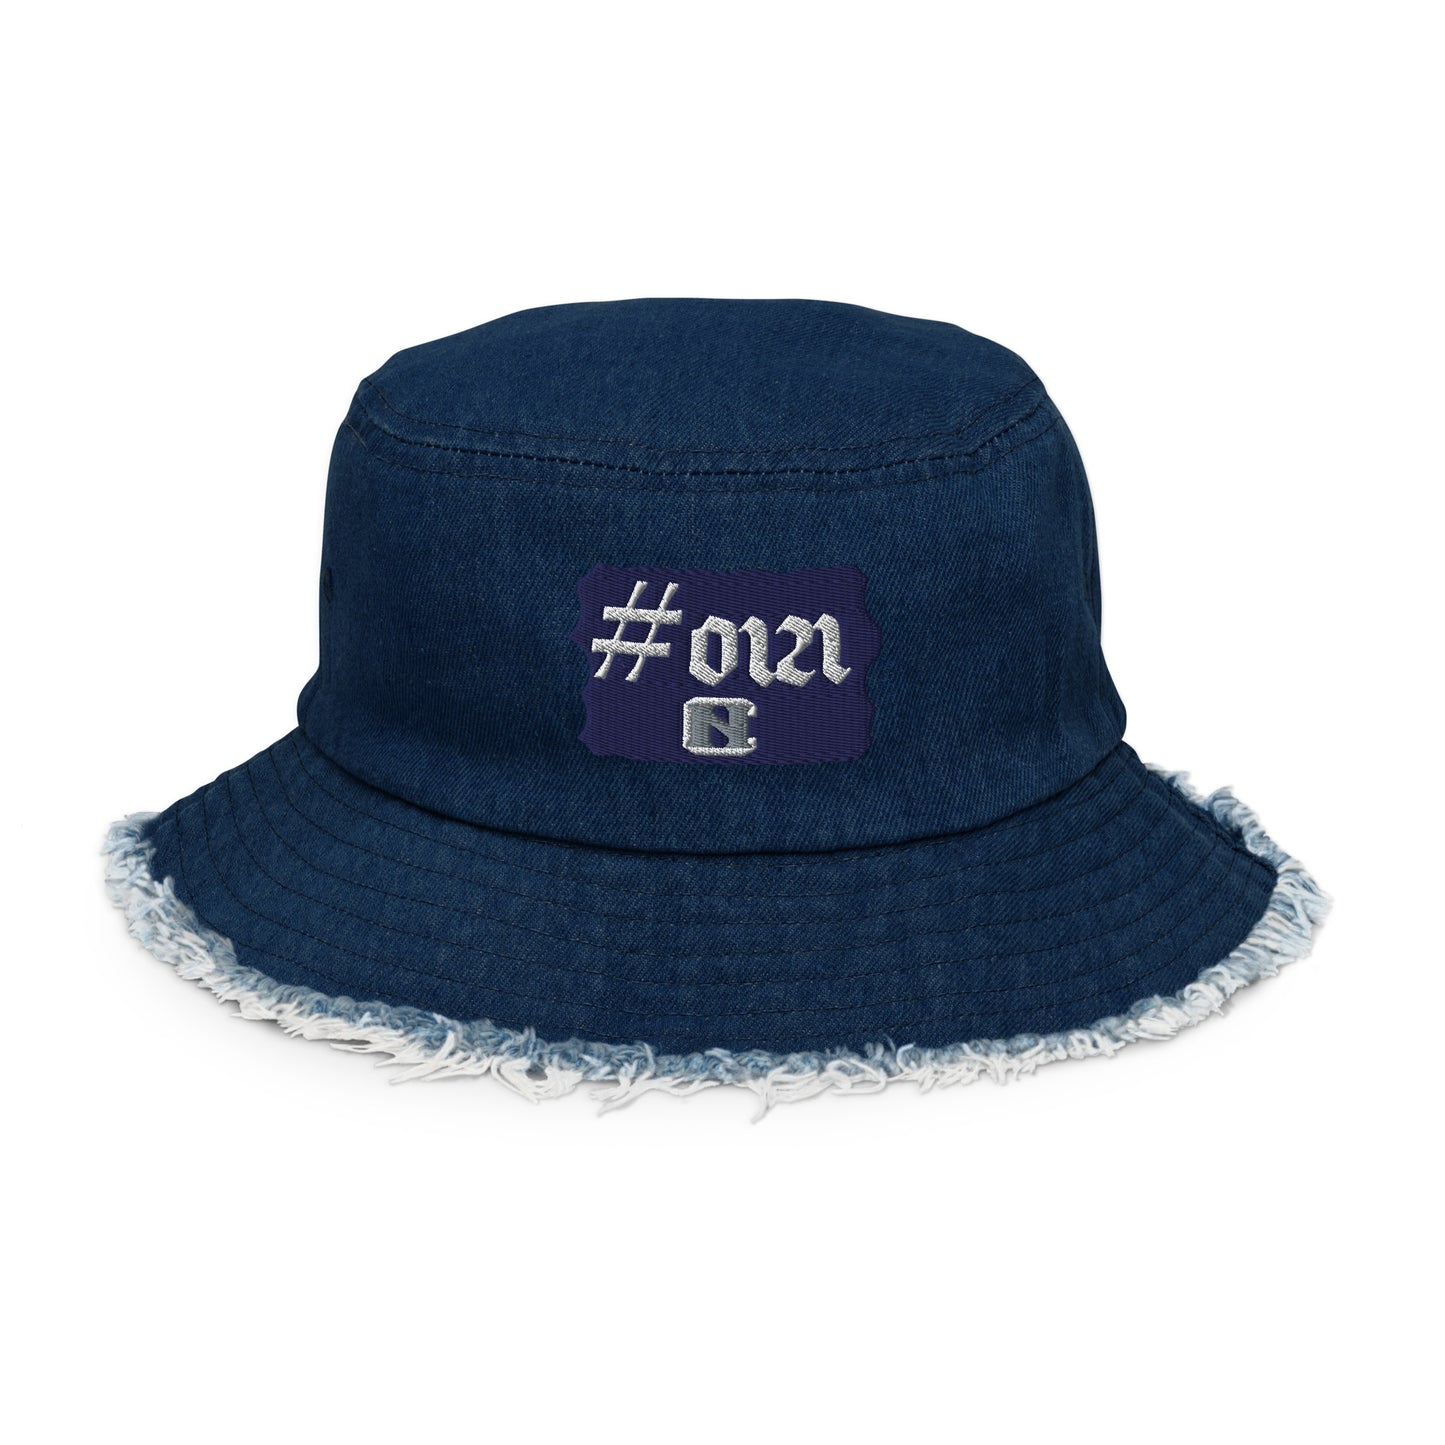 Hashtag 0121 Embroidered - Distressed Denim Bucket Hat